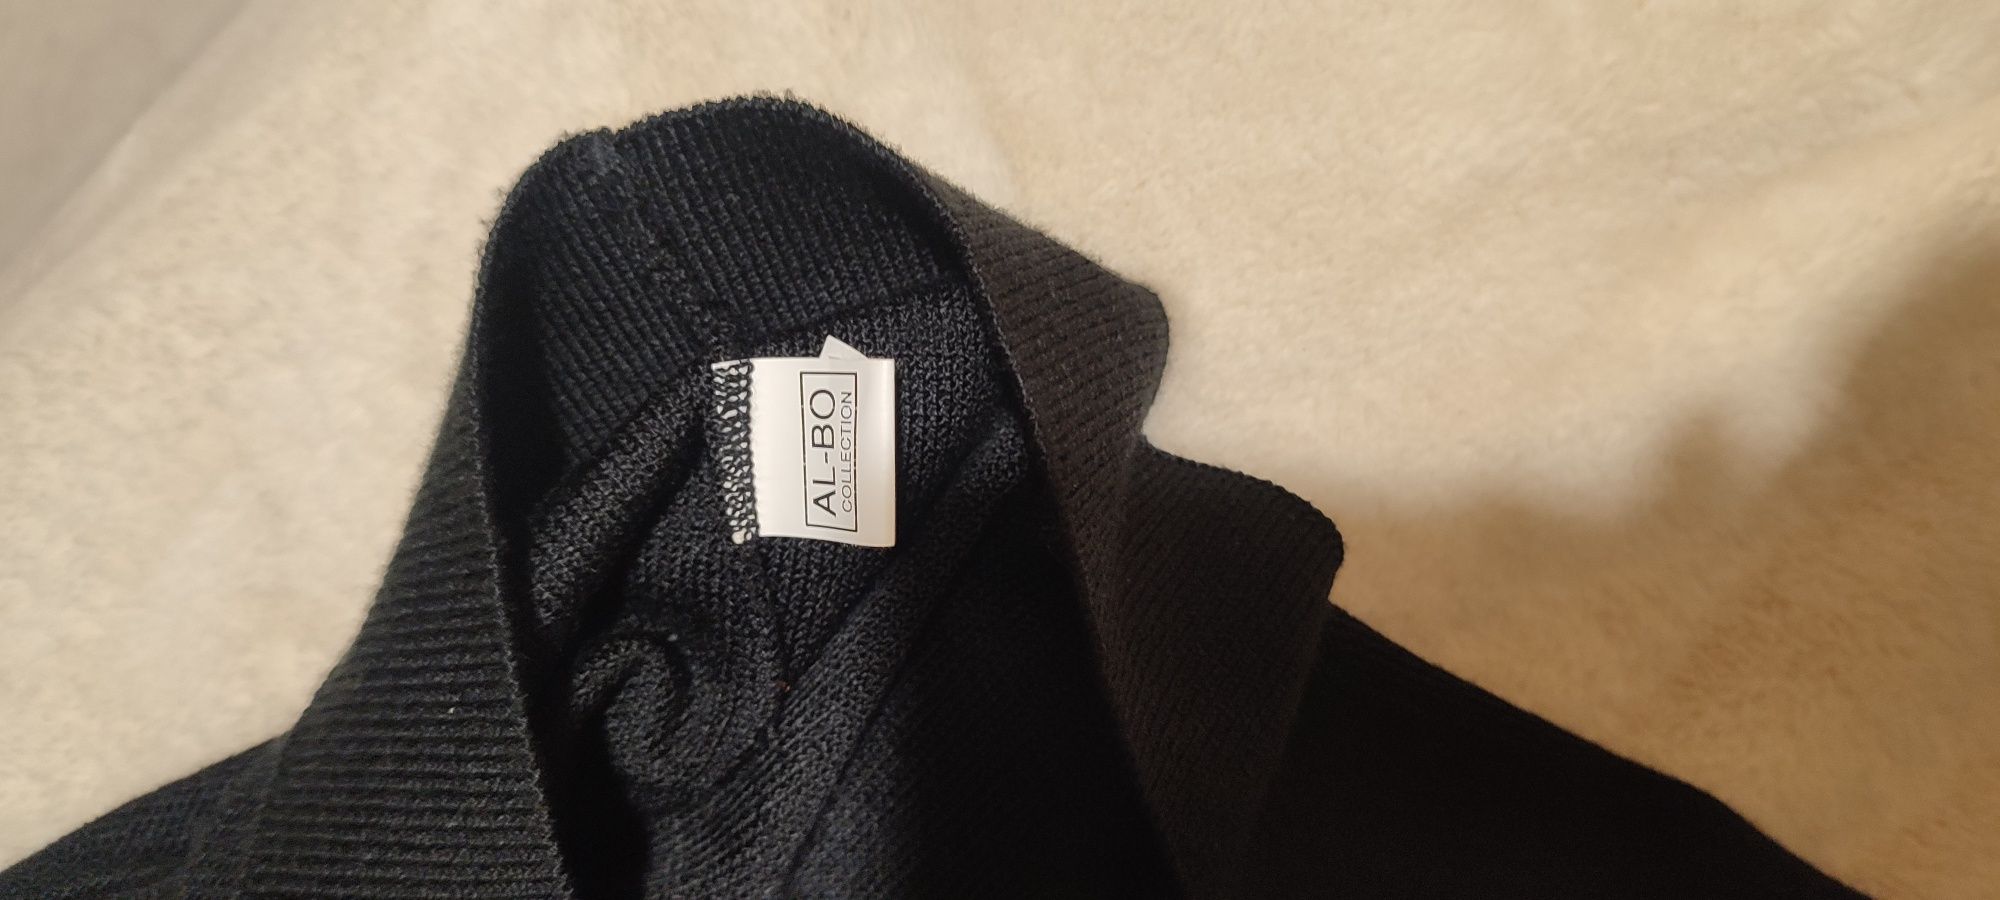 AL-BO Collection czarny rozpinany sweter XL